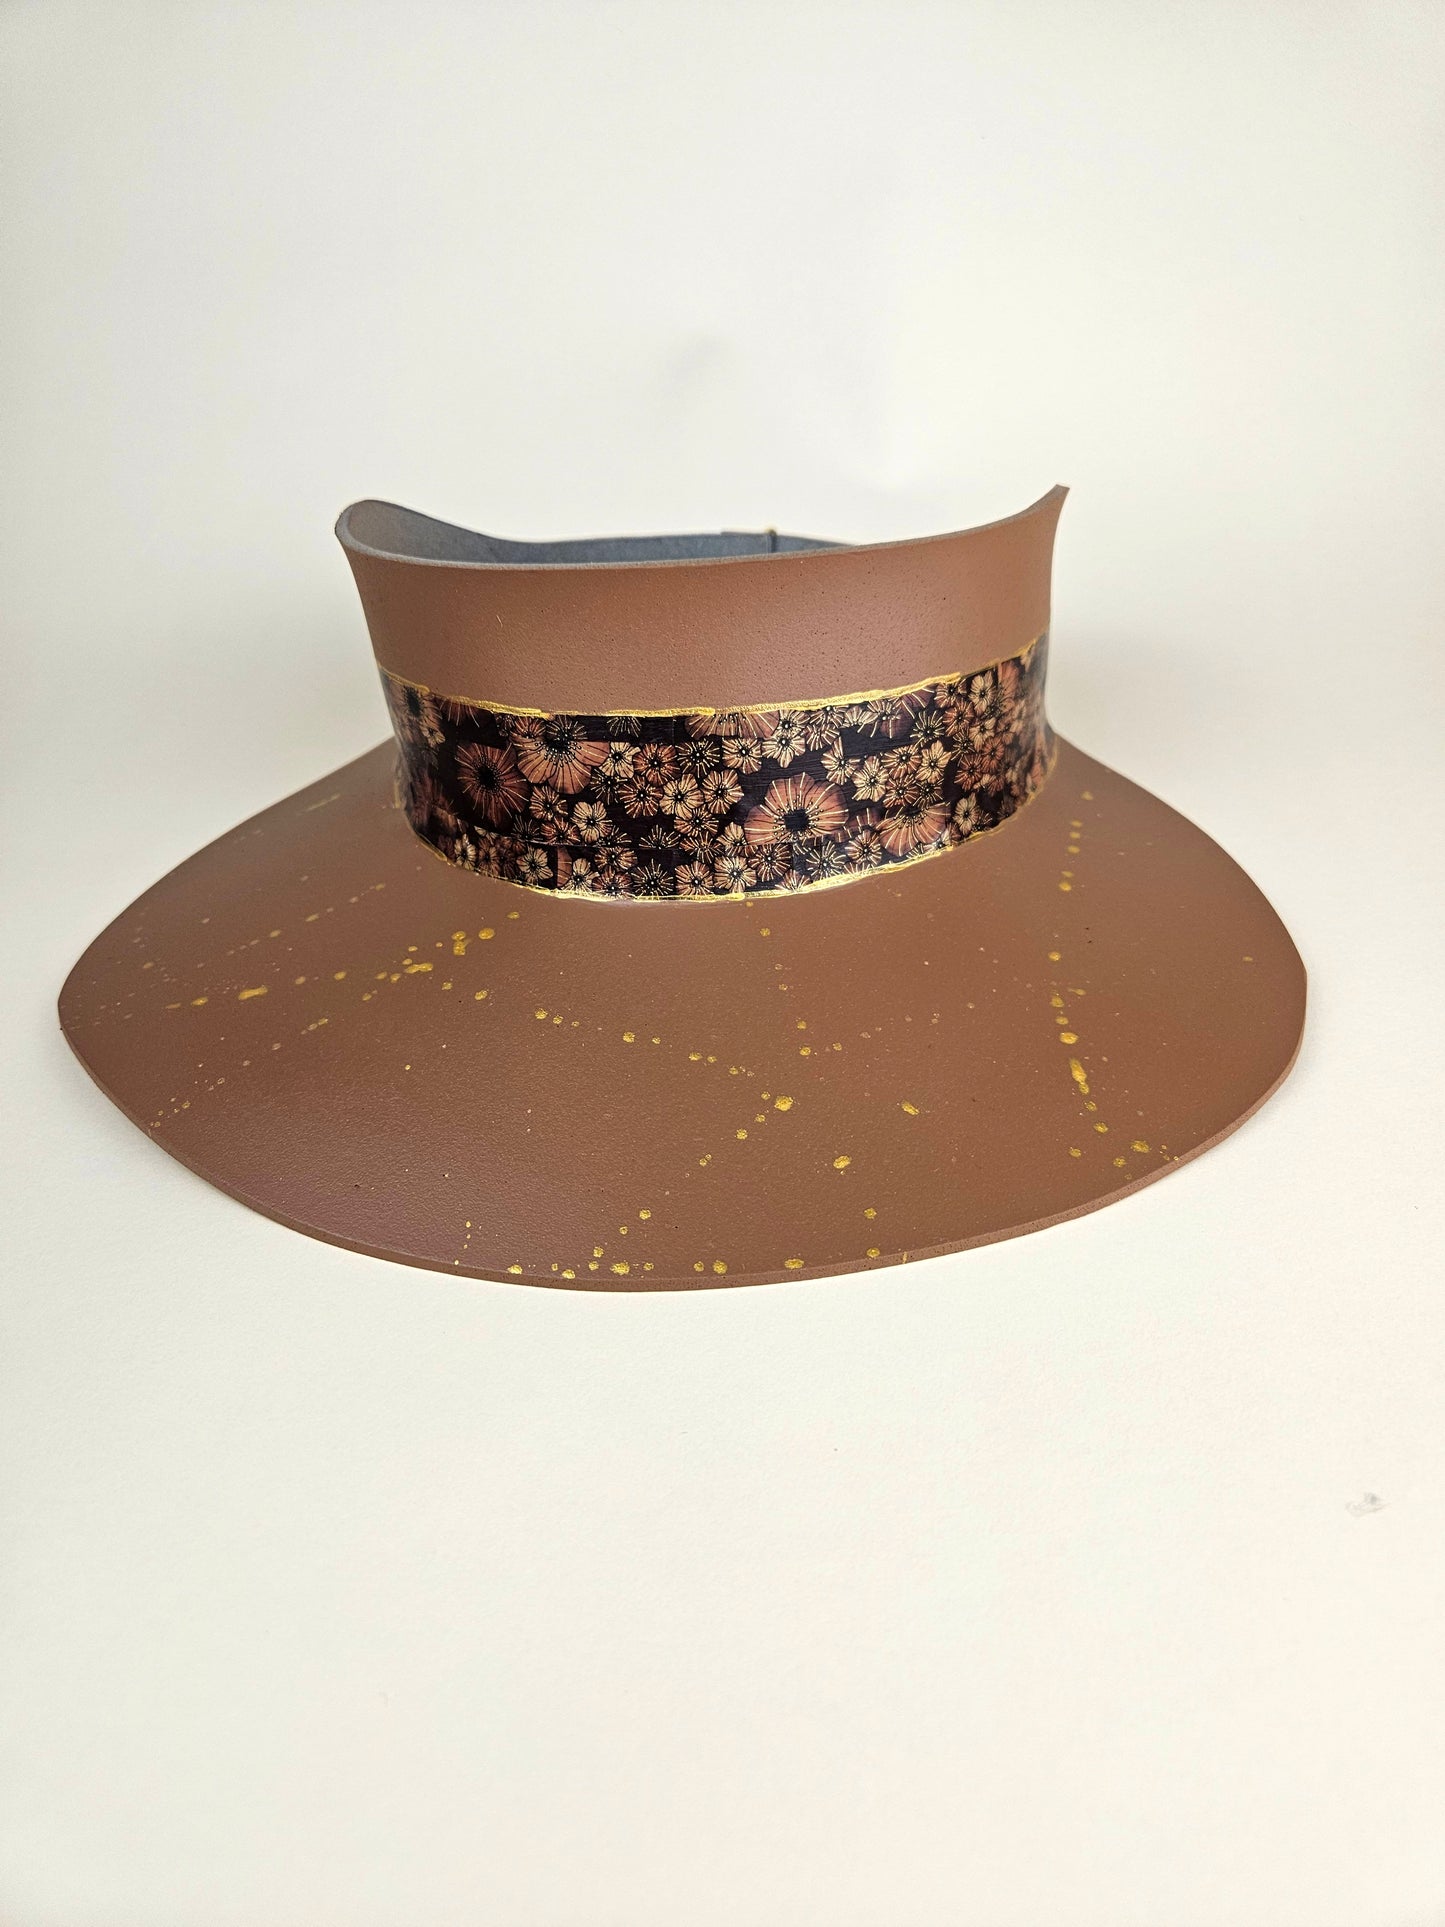 Tall Caramel Brown Audrey Sun Visor Hat with Fancy Brown Floral Band and Gold Paint Splatter Effect: UV Resistant, Walks, 1950s, Brunch, Tea, Golf, Wedding, Church, No Headache, Easter, Pool, Beach, Big Brim